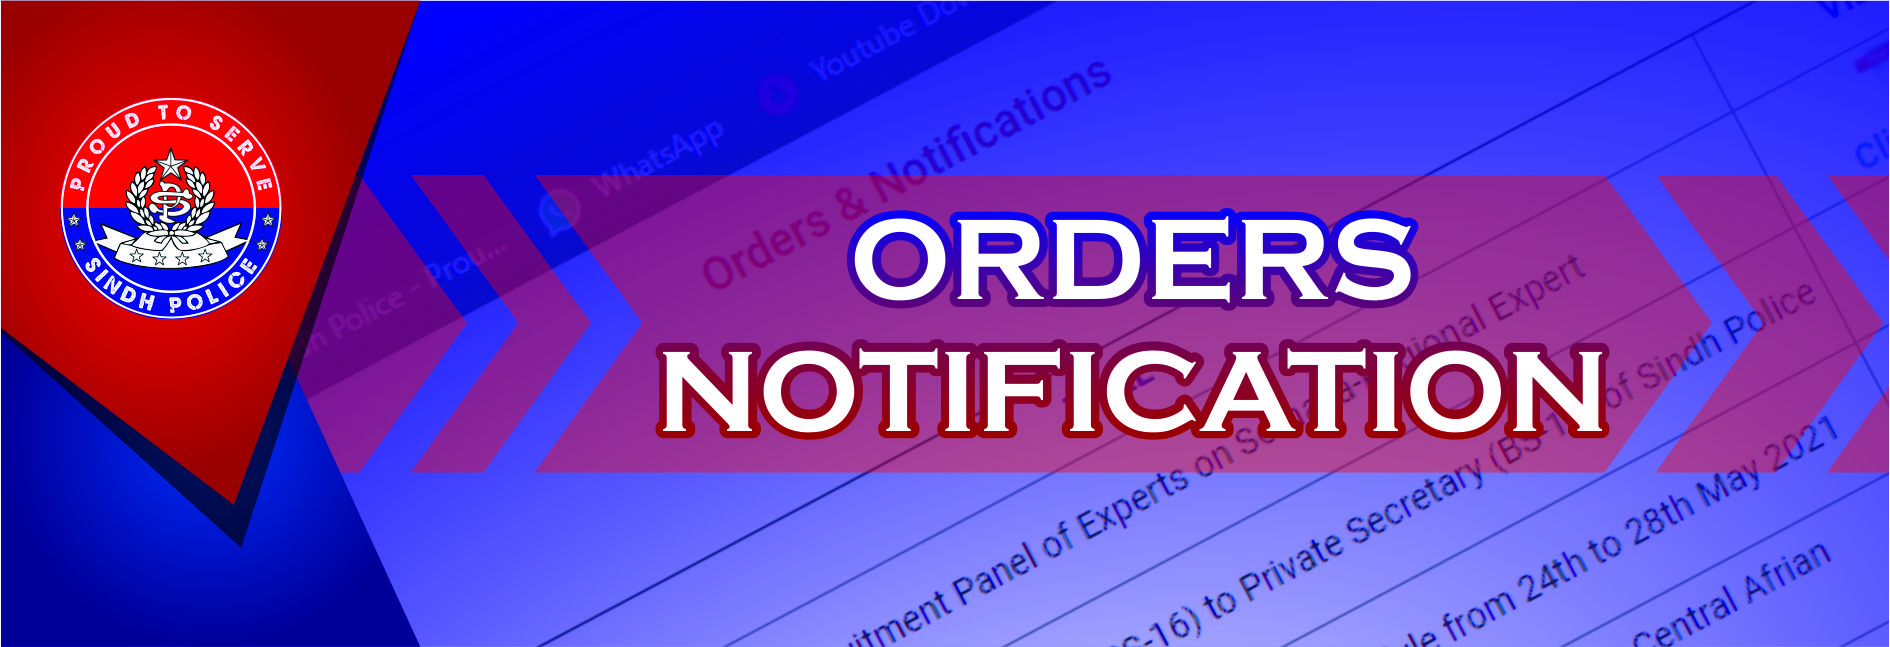 Orders & Notifications Image